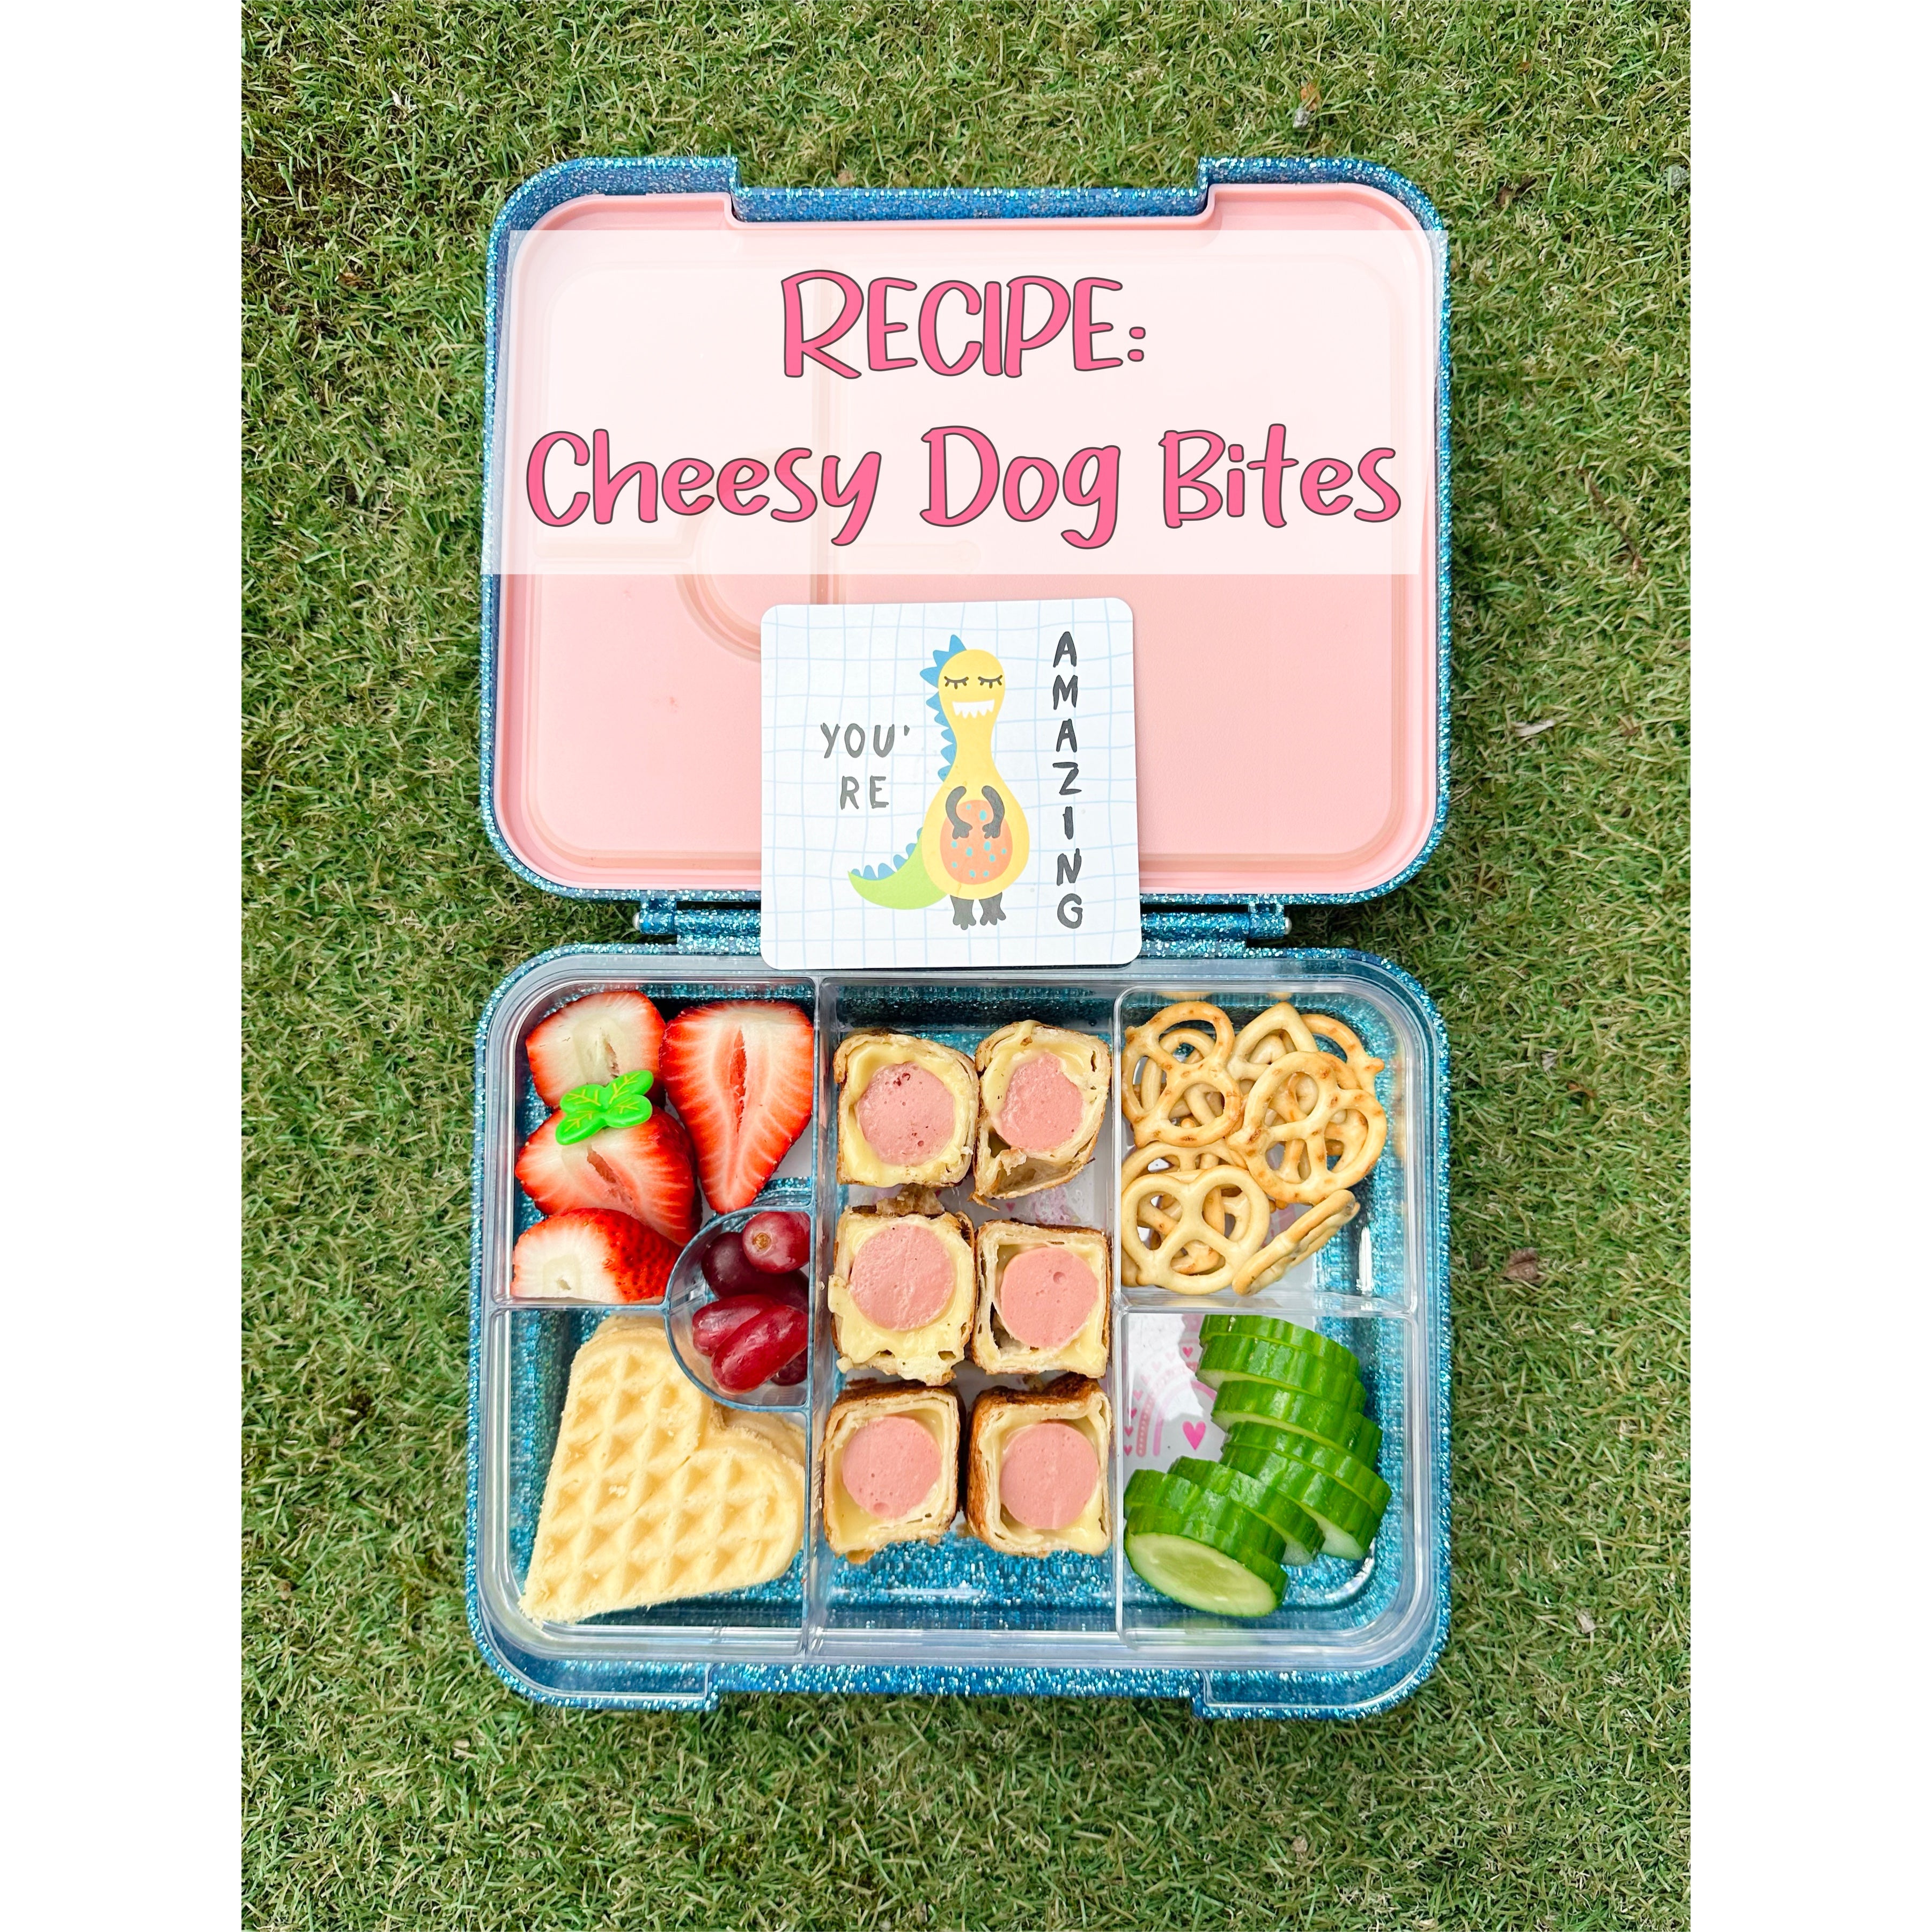 Cheesy Hot Dog Bites Lunchbox Recipe